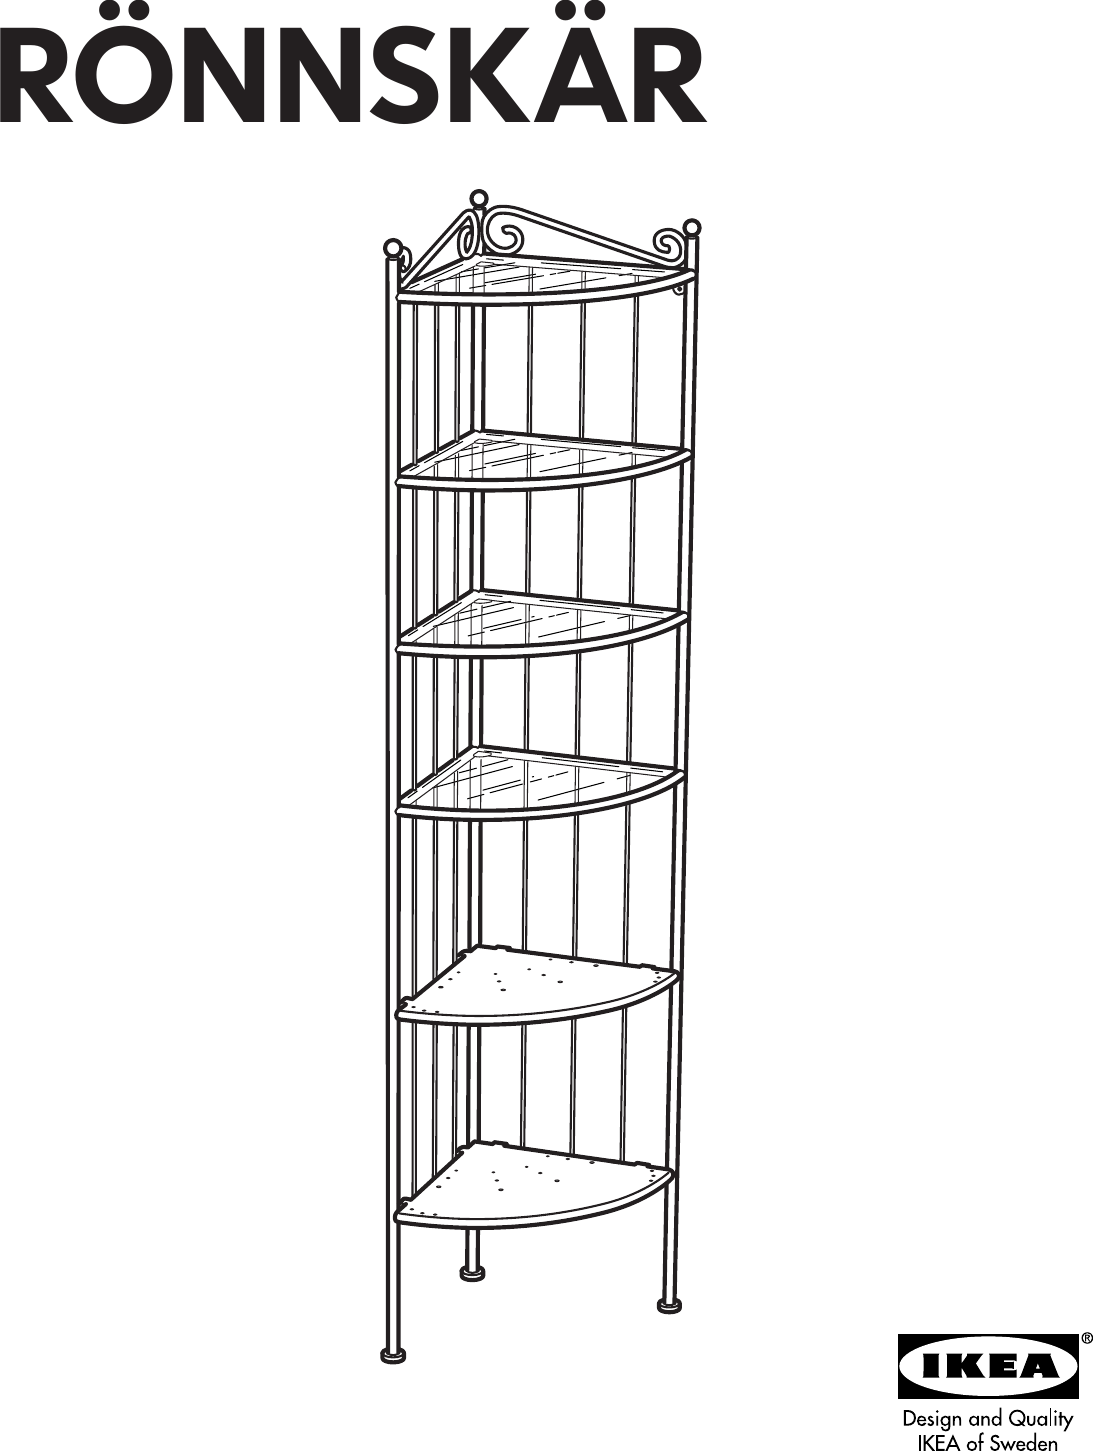 Ikea Rannskar Corner Shelf Unit Assembly Instruction